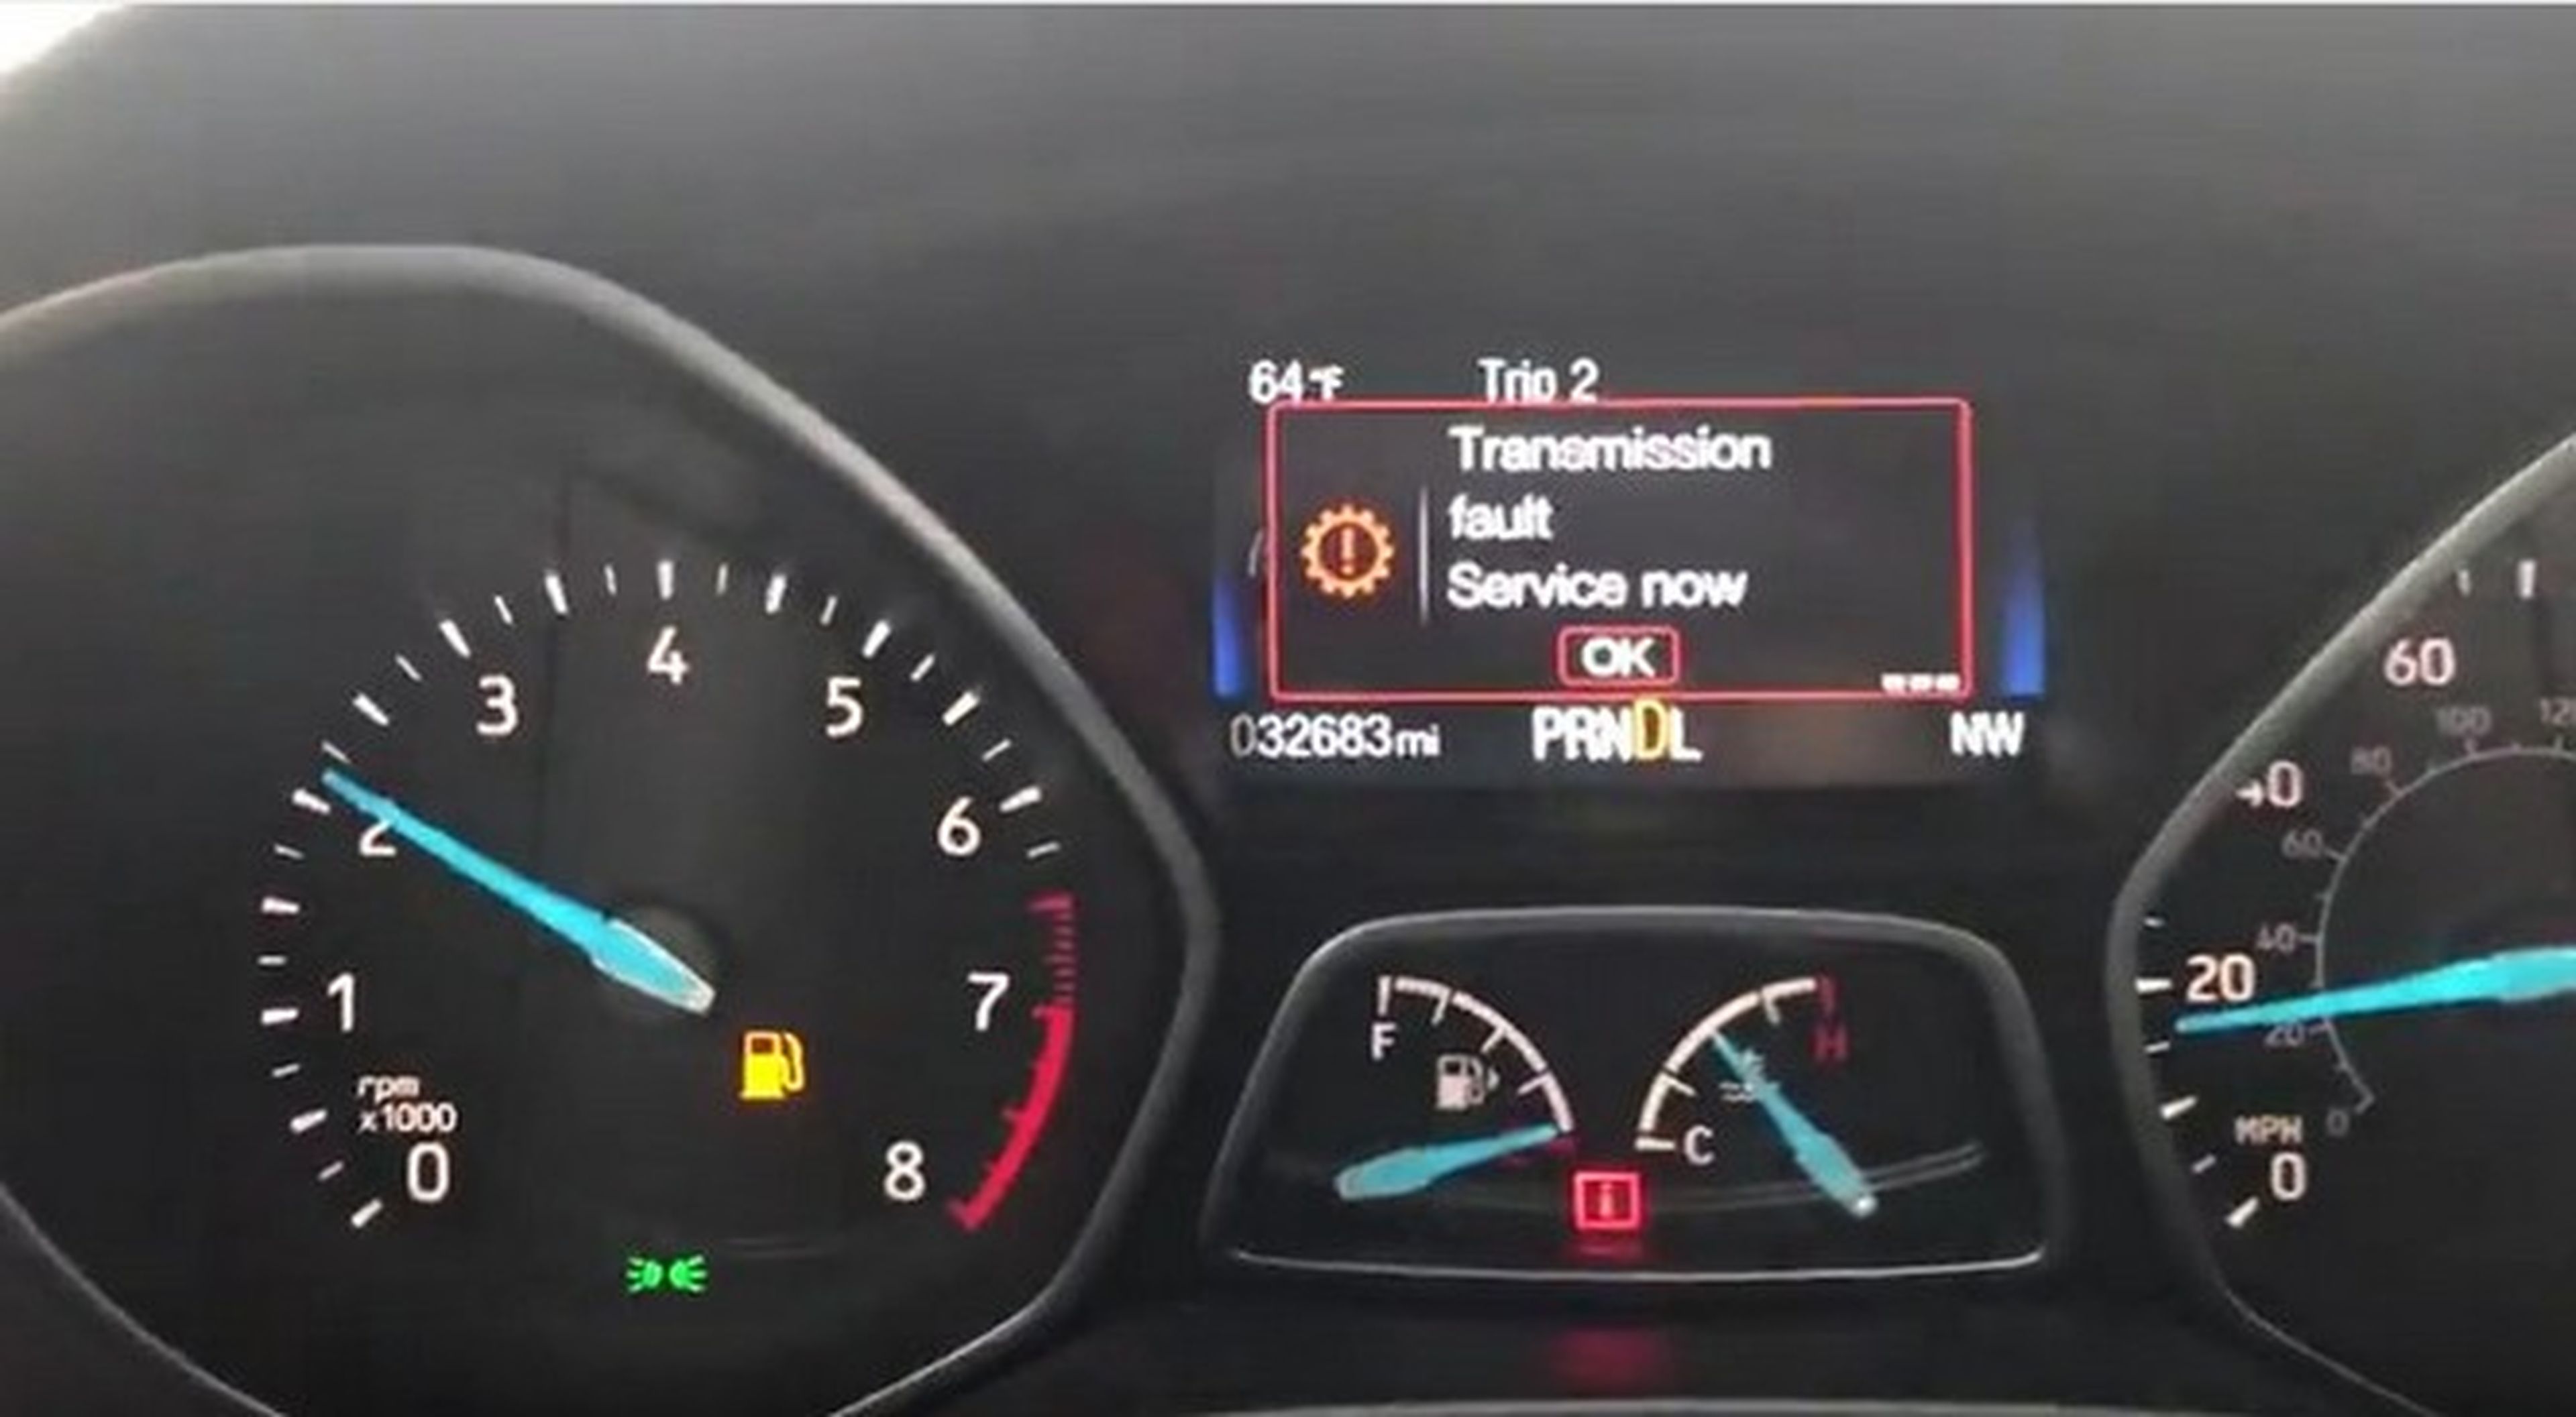 Vídeo: Un Ford Focus con un extraño problema